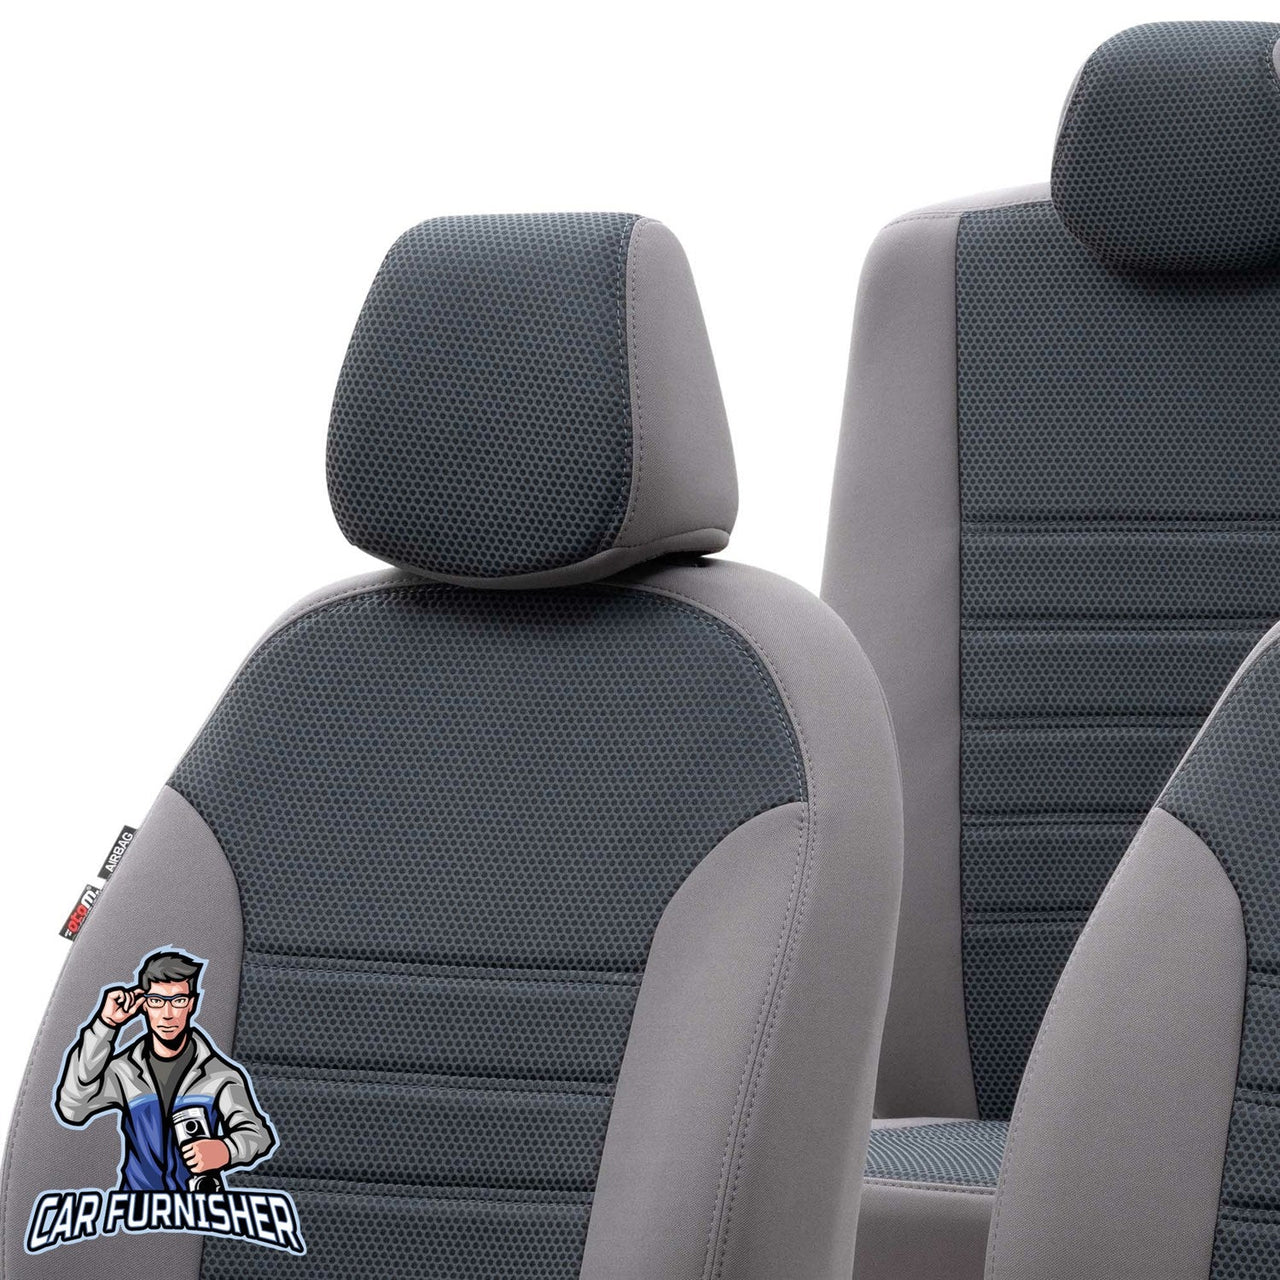 Volkswagen Caddy Seat Cover Original Jacquard Design Smoked Jacquard Fabric